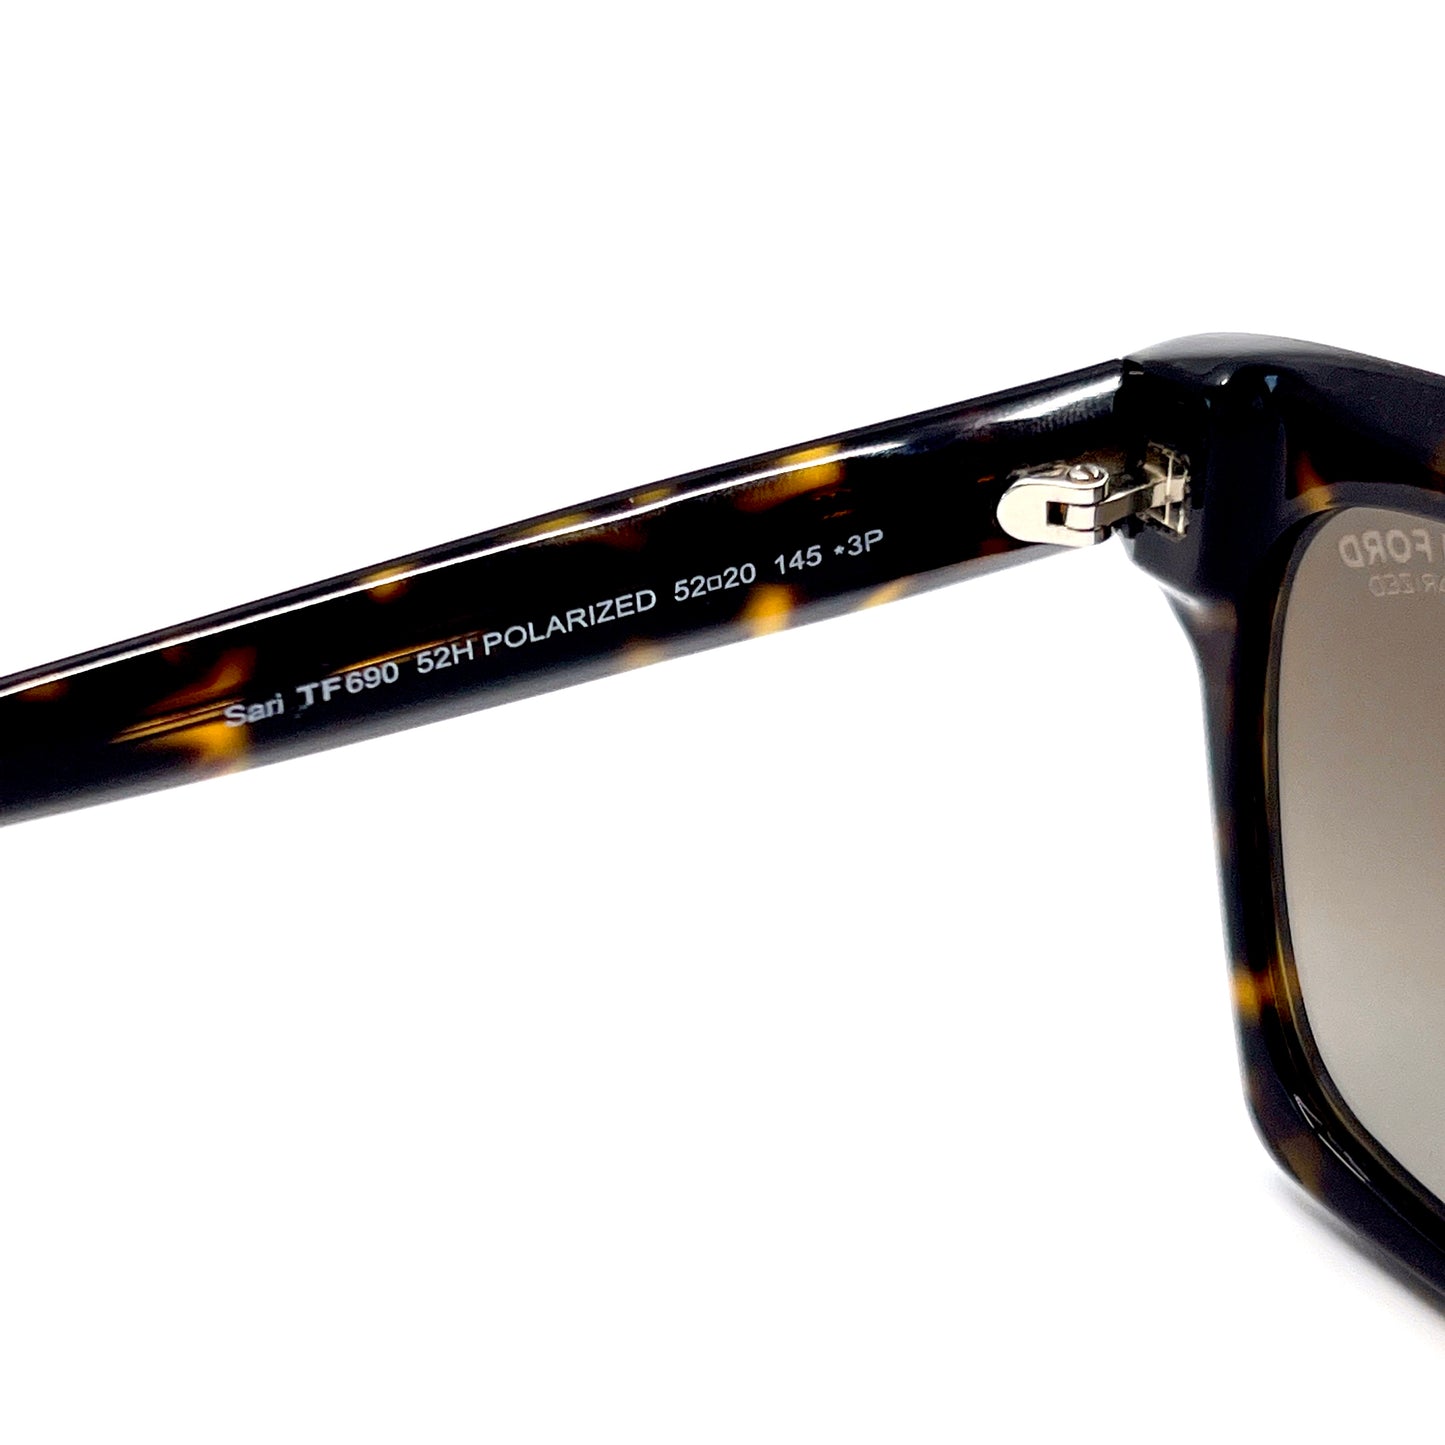 Tom Ford Sunglasses Sari TF690 52H Sunglasses